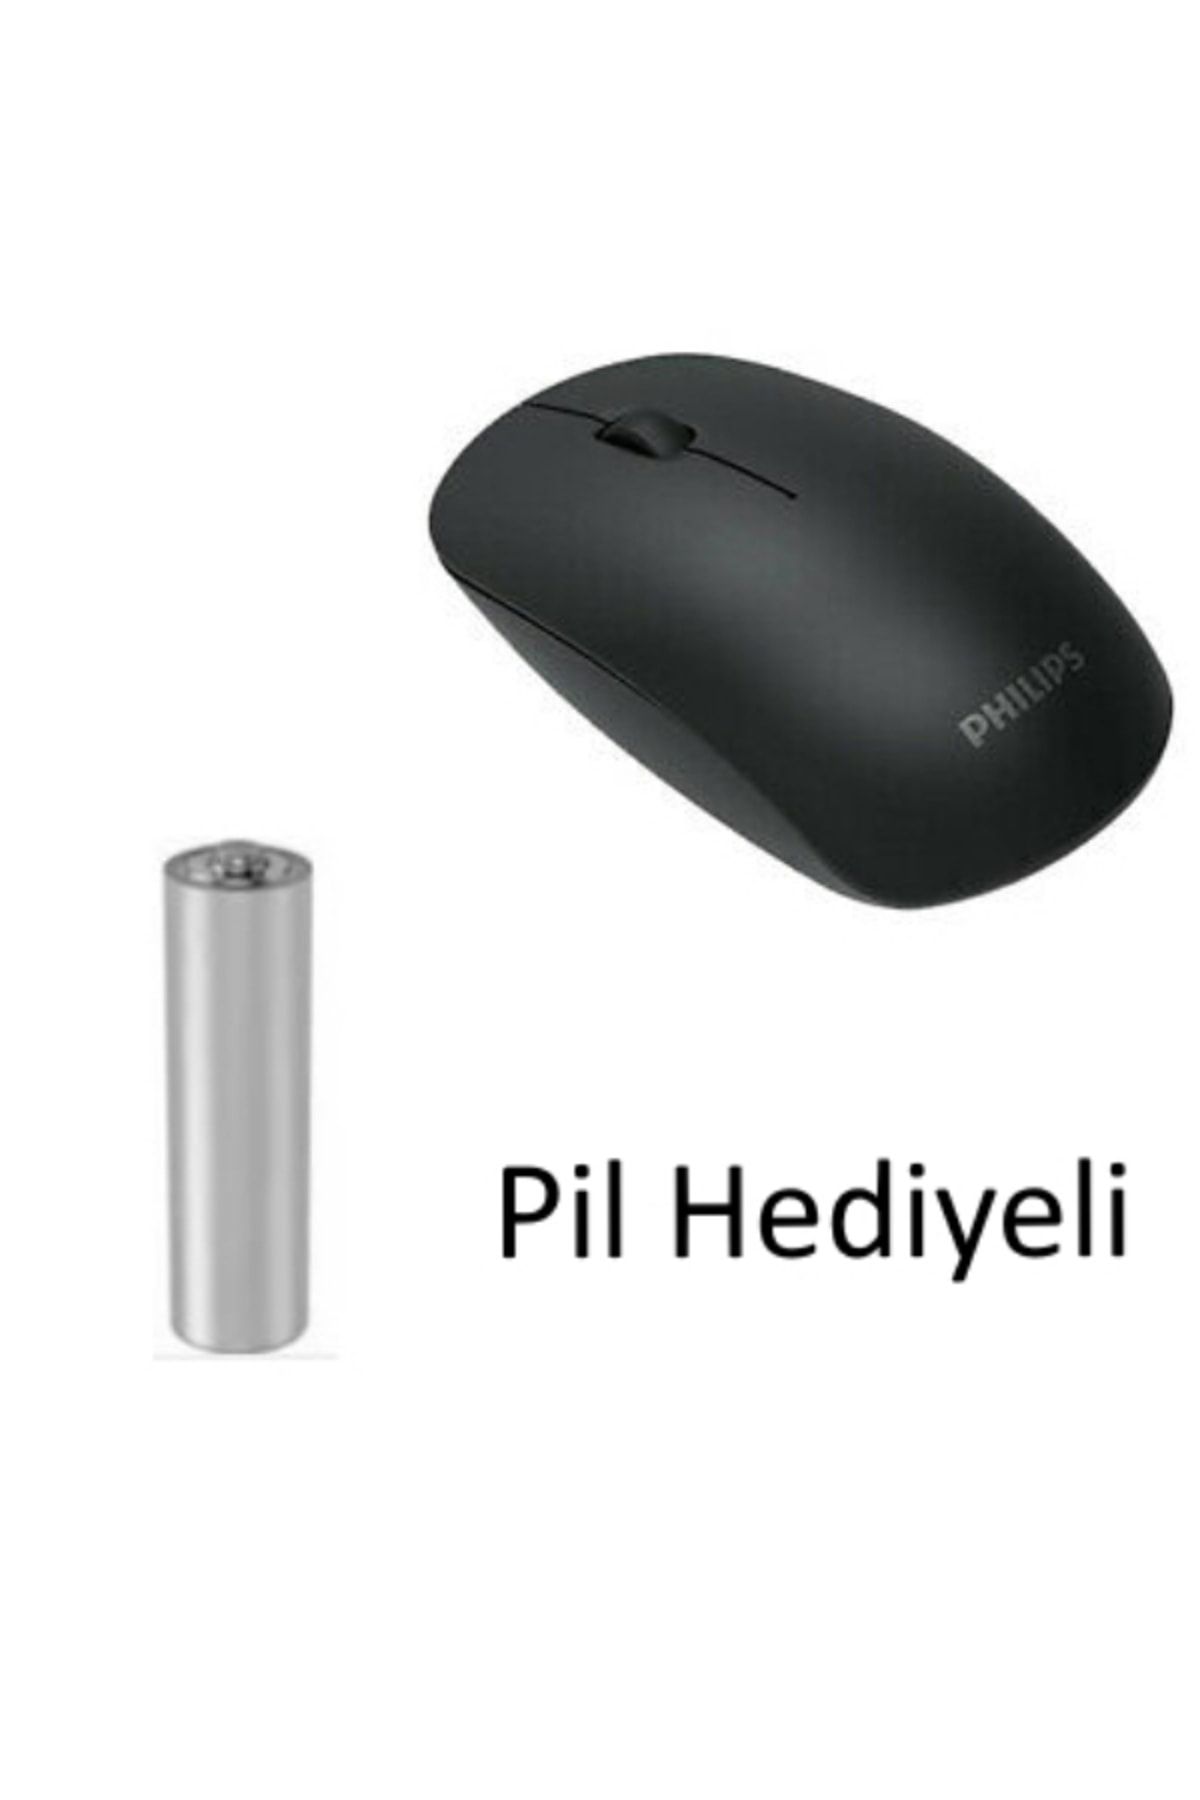 Philips Pil Hediyeli Kablosuz Mouse Spk7221 M221 2.4ghz 1600dpi